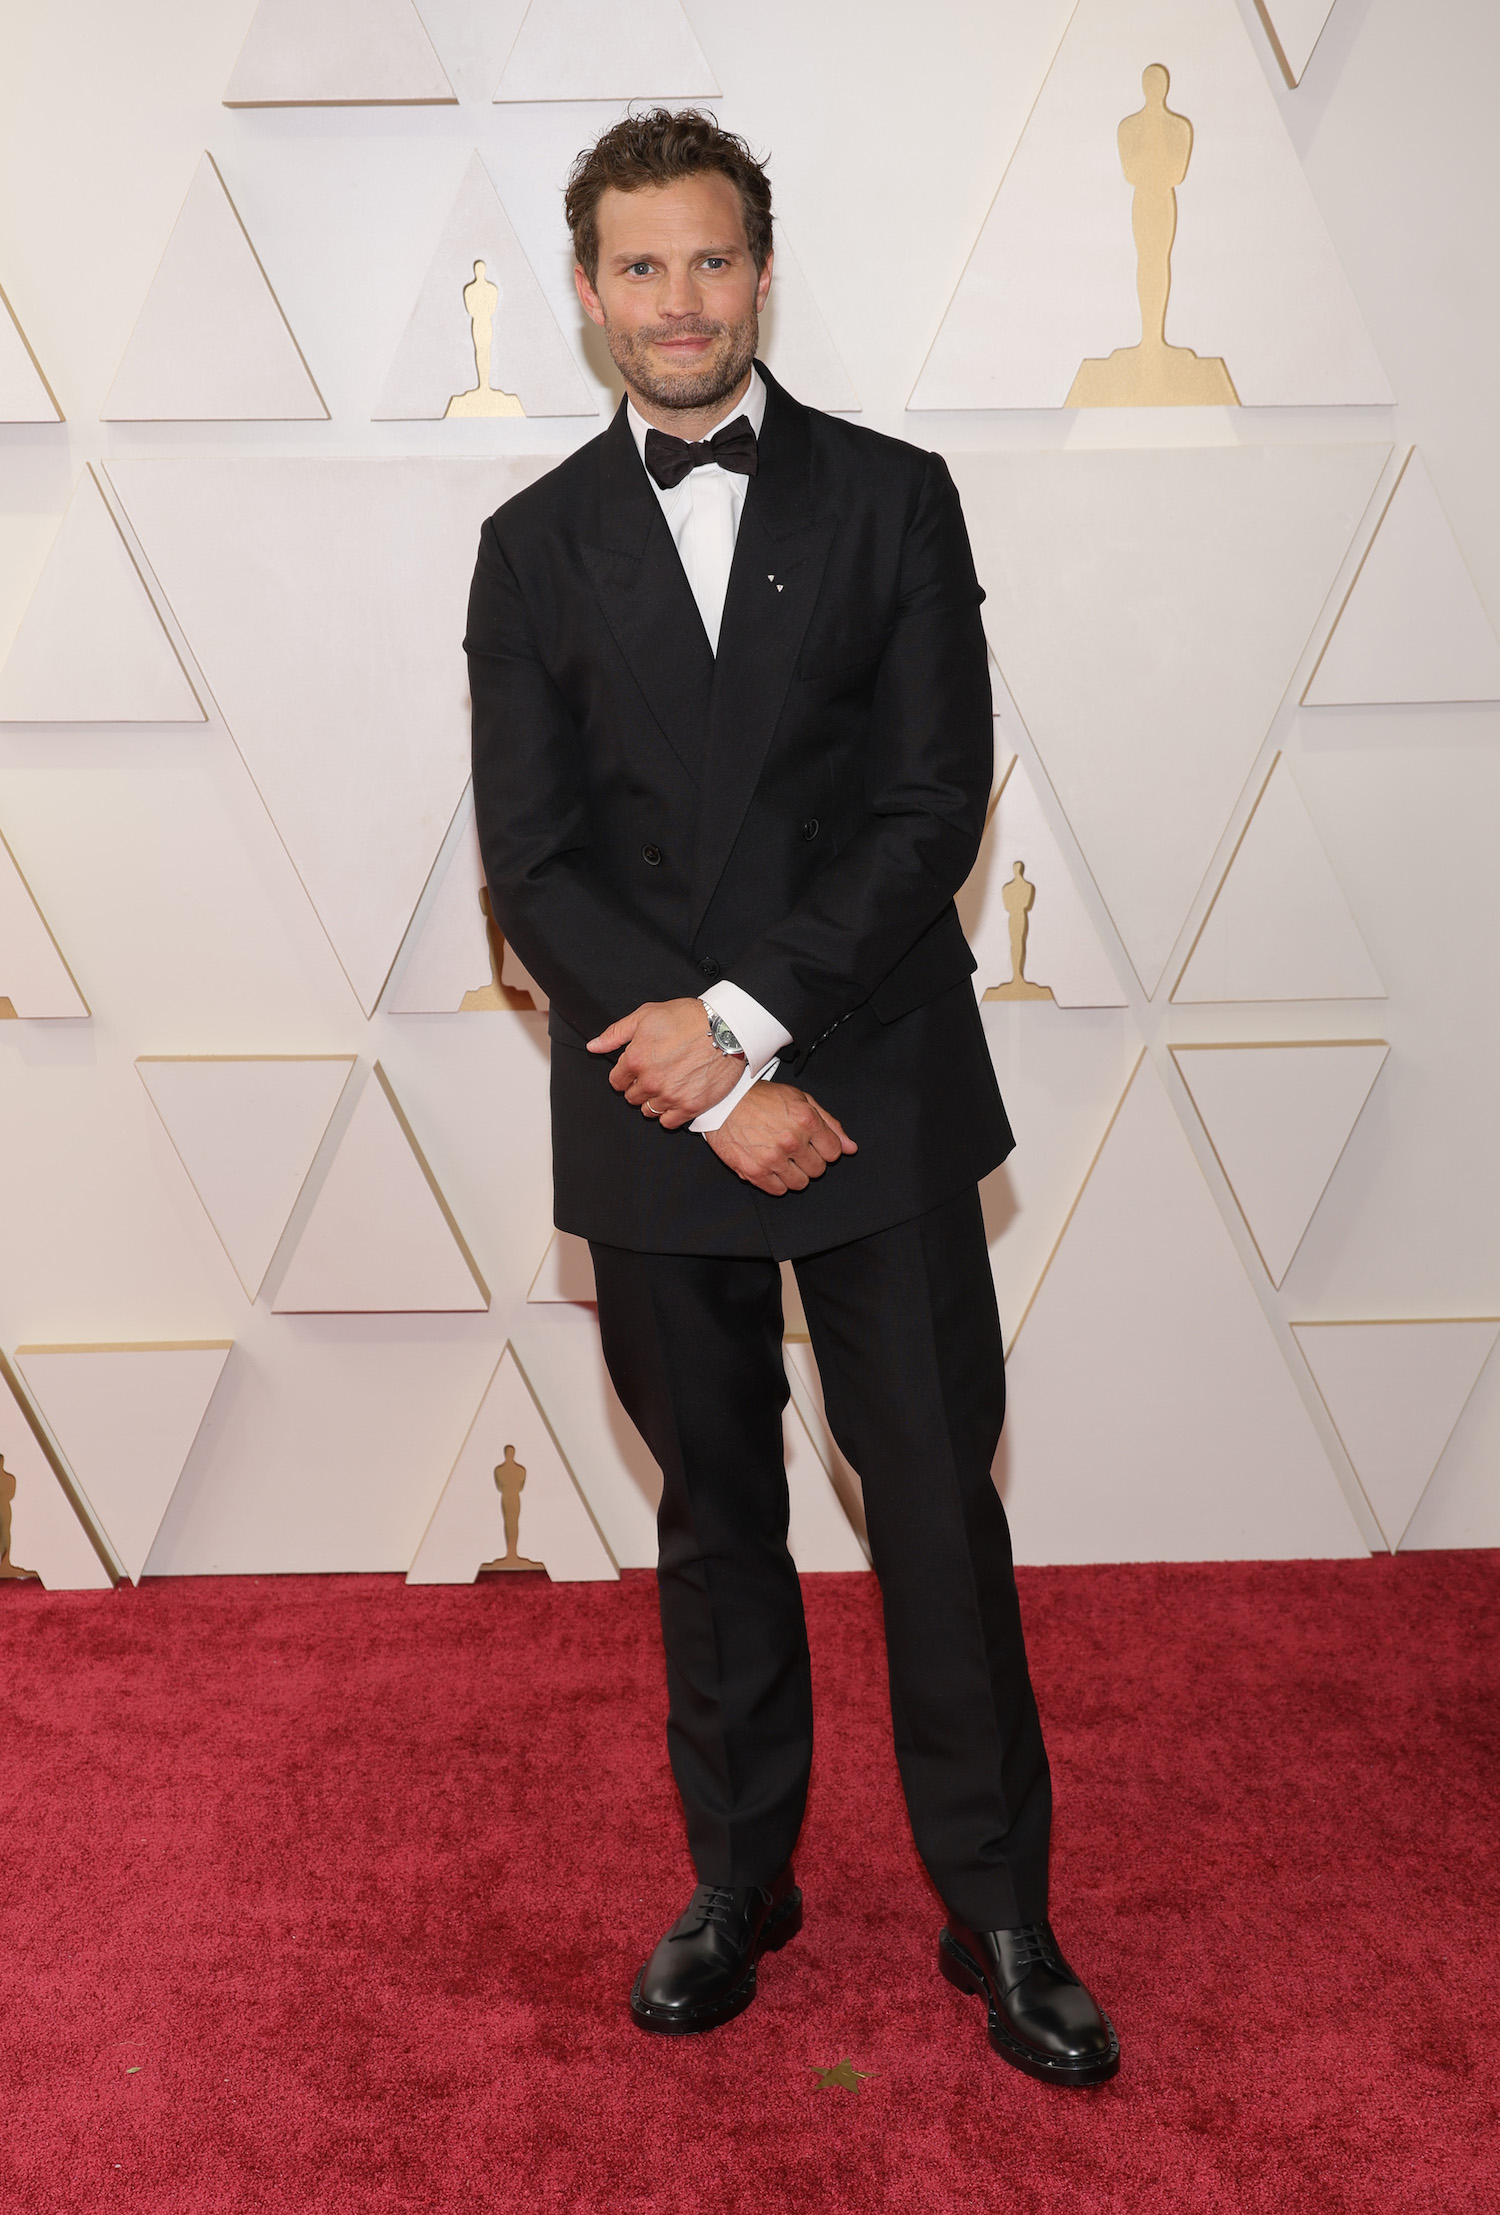 Jamie Dornan at the Oscars 2022